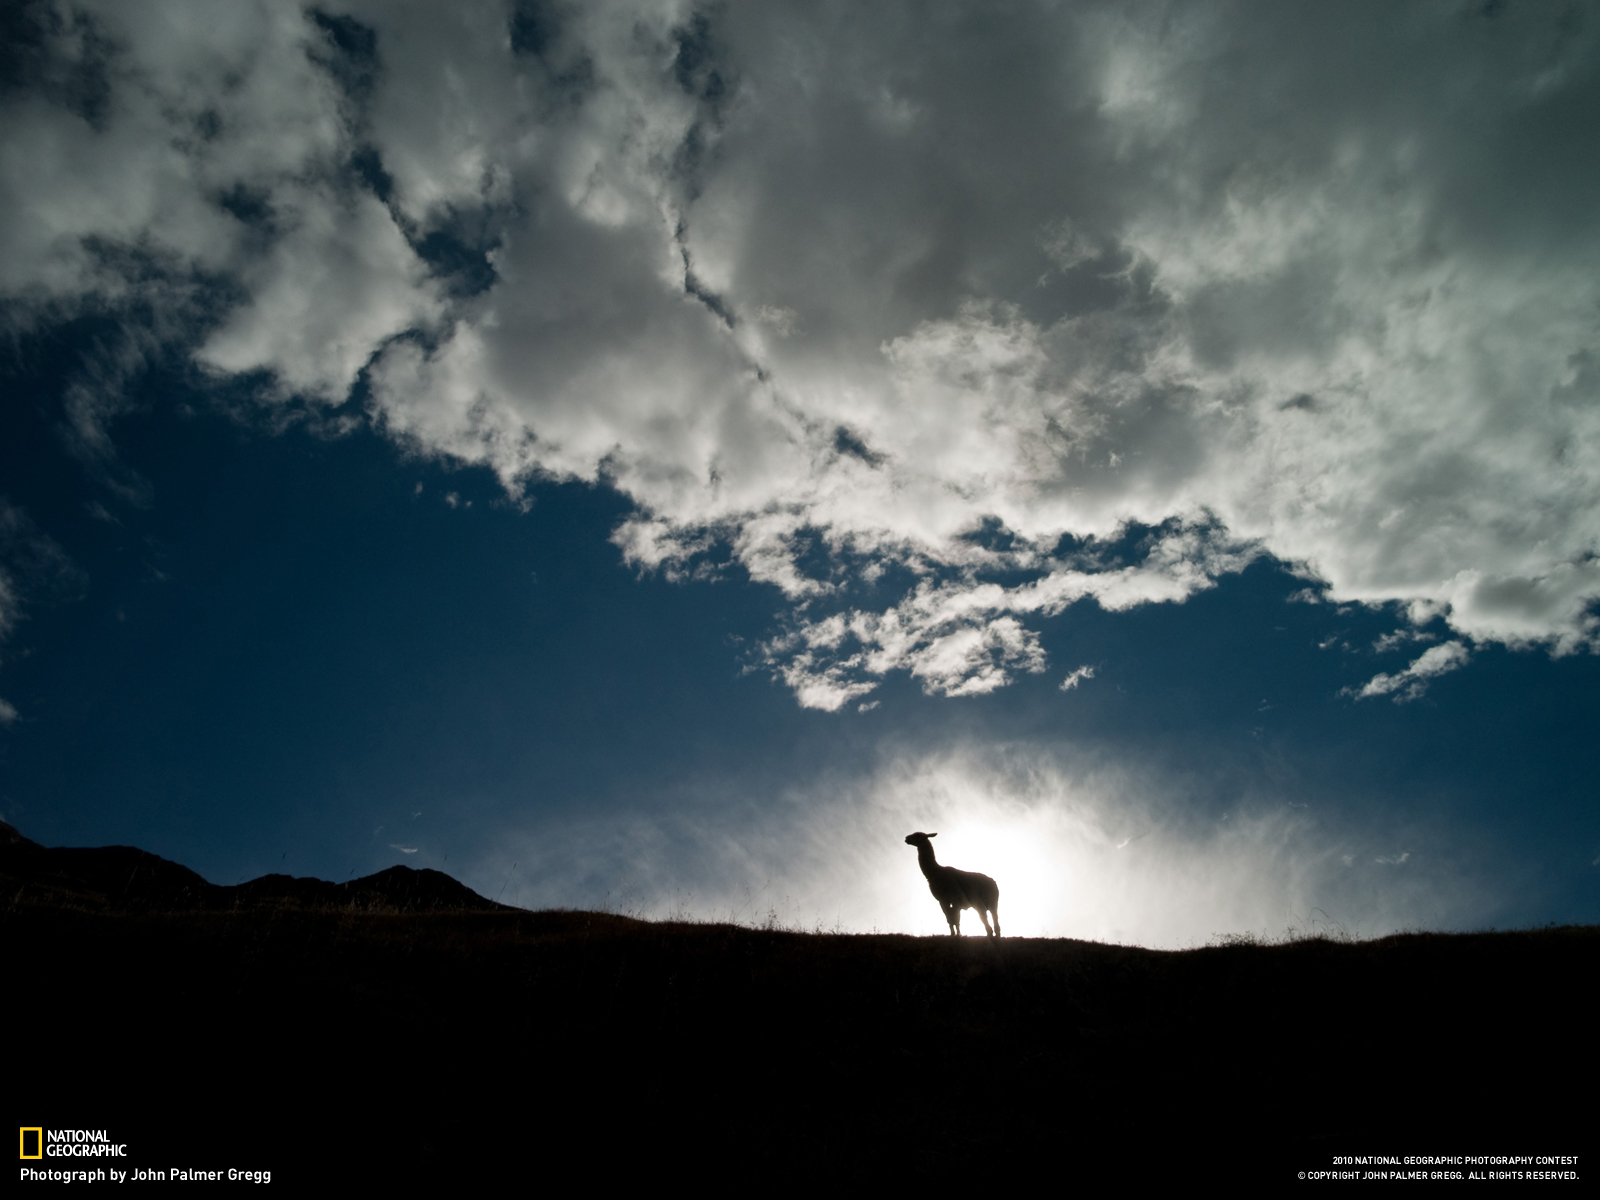 Animal Llama HD Wallpaper | Background Image